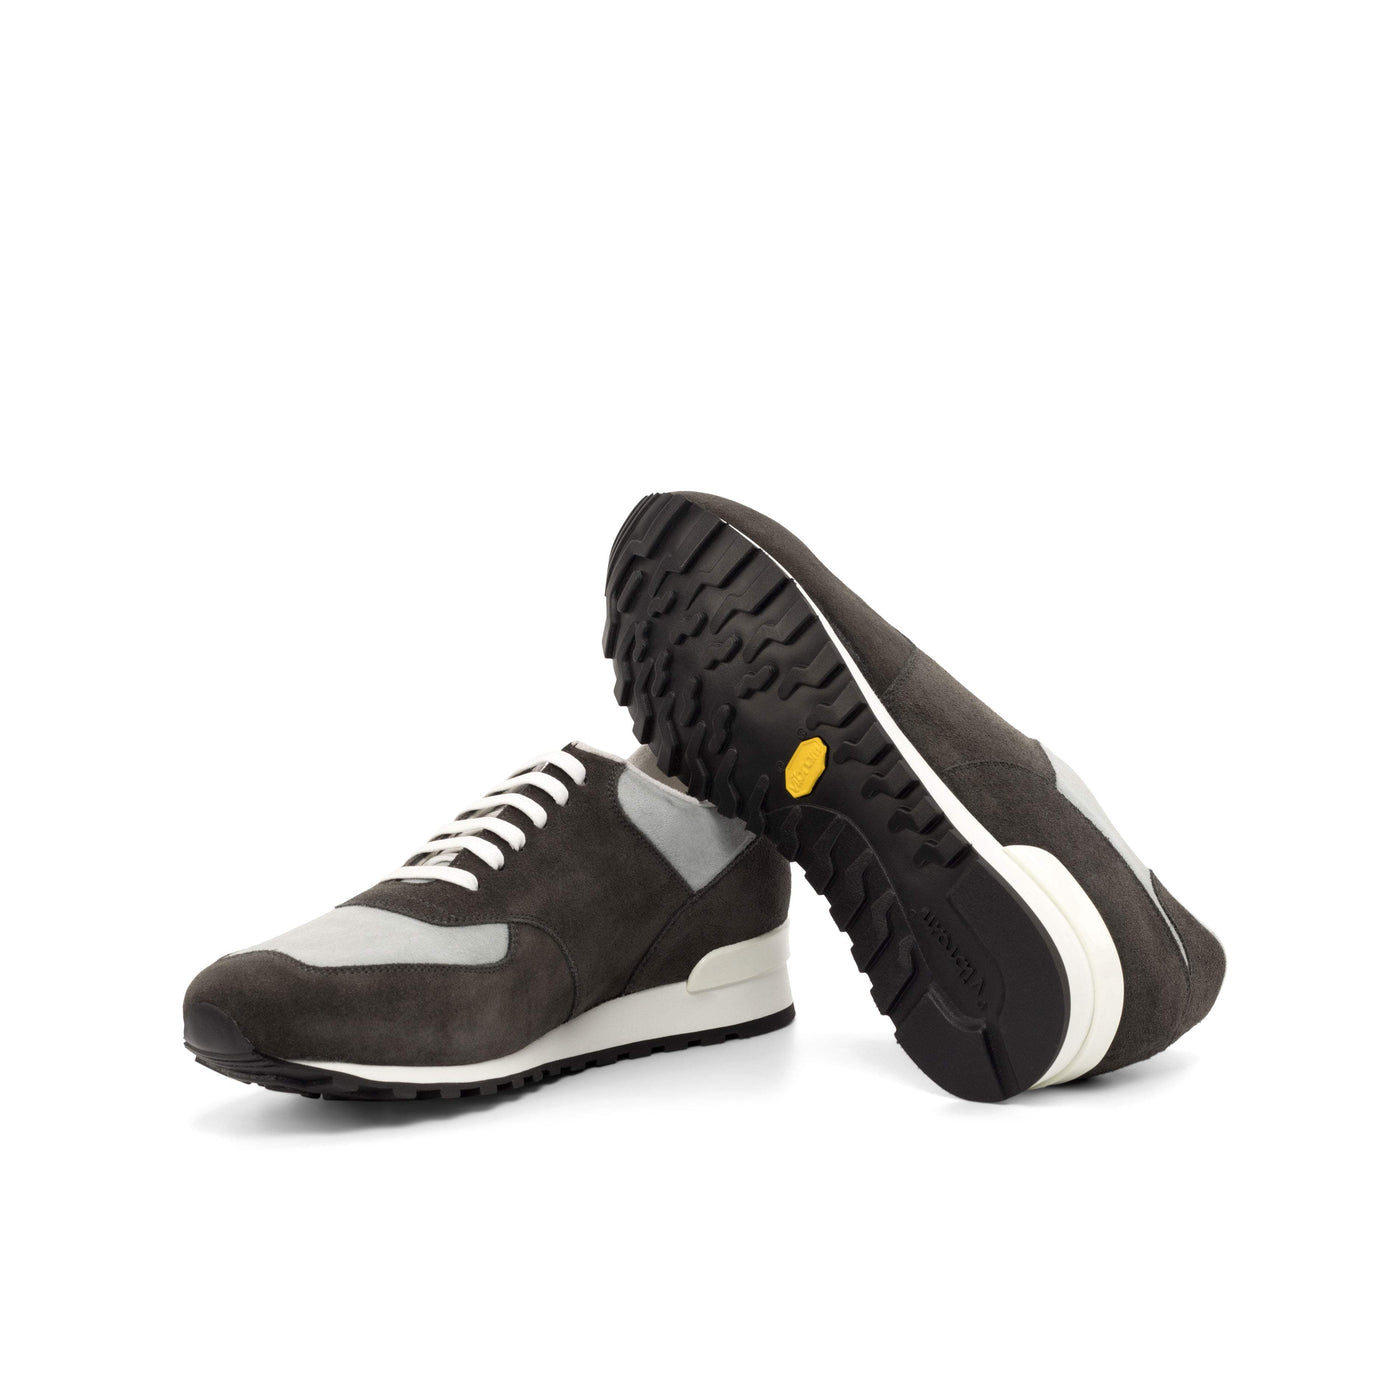 Men's Jogger Sneakers Leather Grey 4685 2- MERRIMIUM